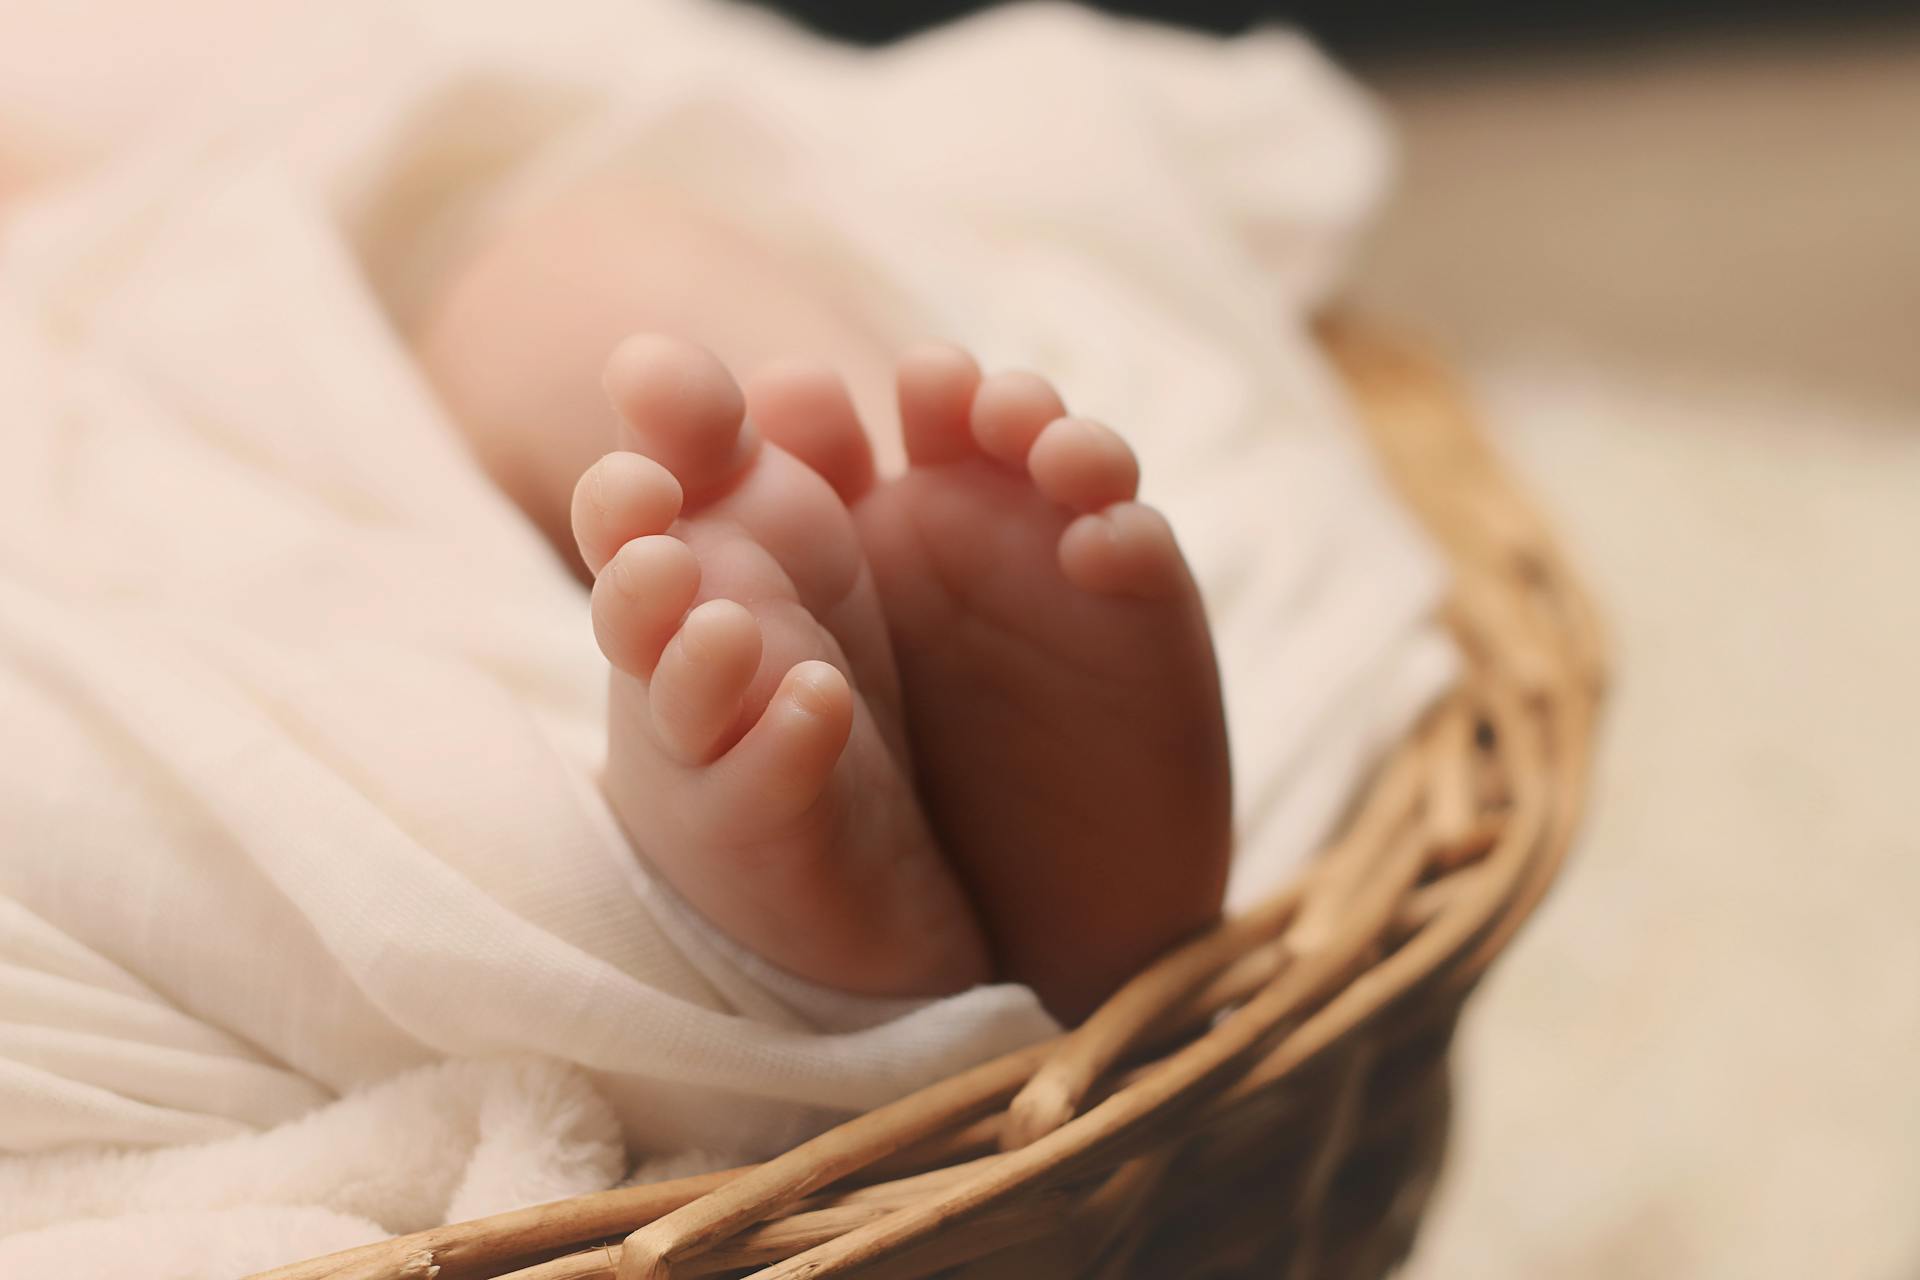 A newborn baby's feet | Source: Pexels